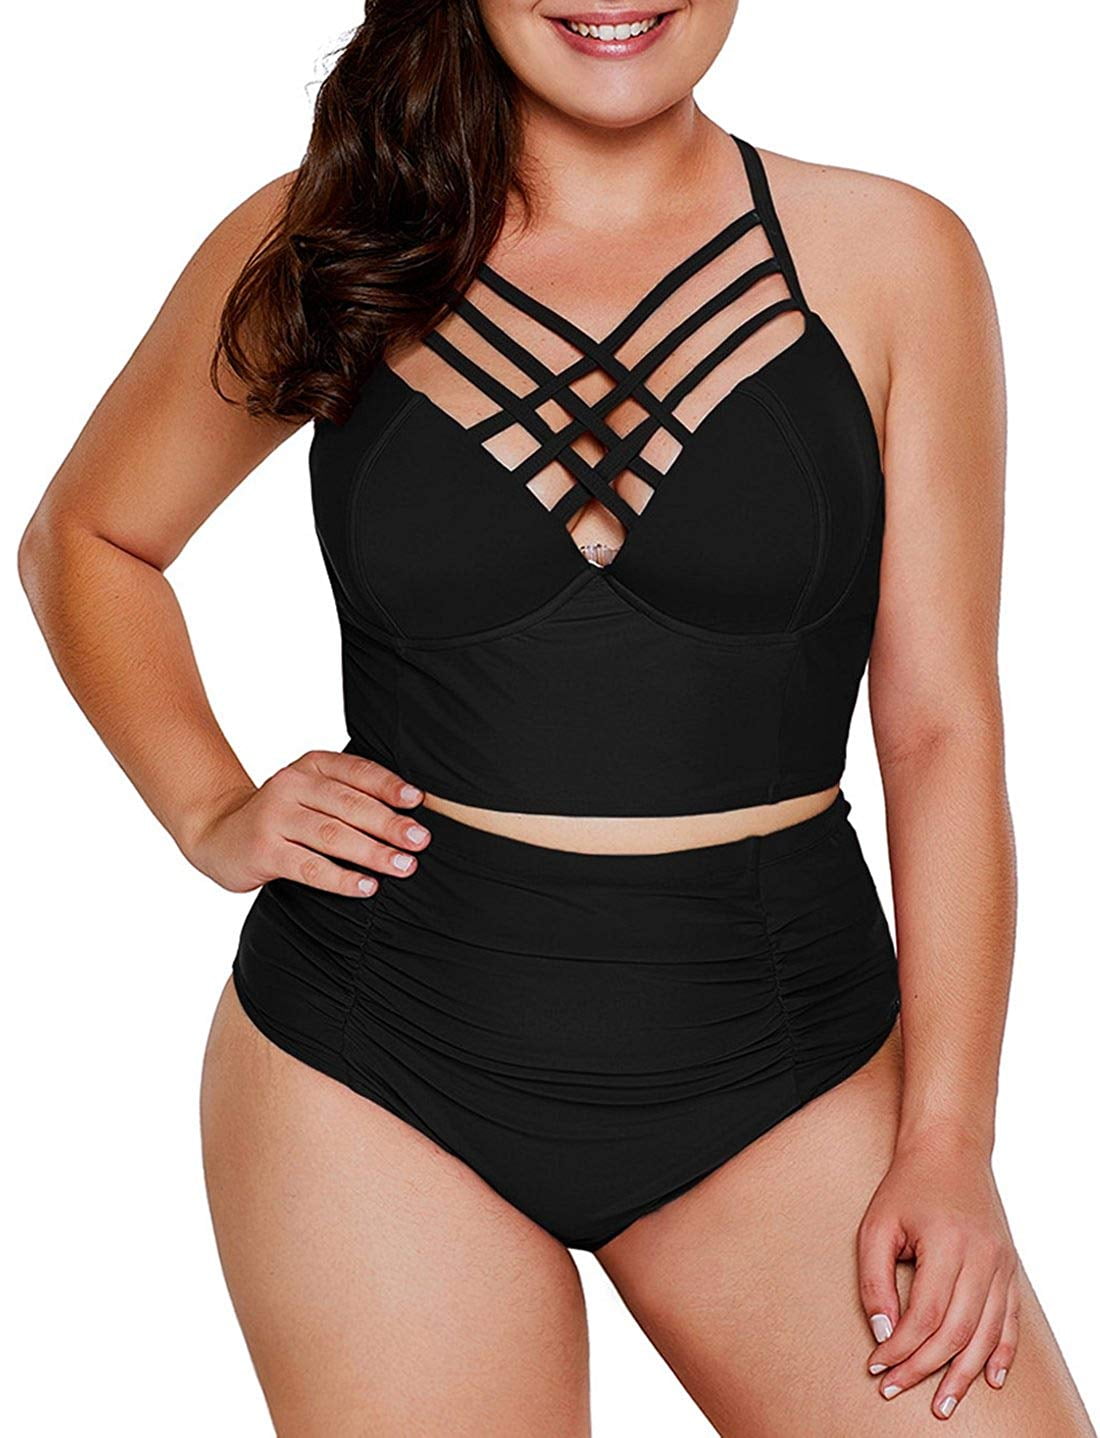 Plus Size Tankini Bathing Suits for Women Swimsuits Tummy Control 2 Piece High Waisted Swimwear Beachwear 